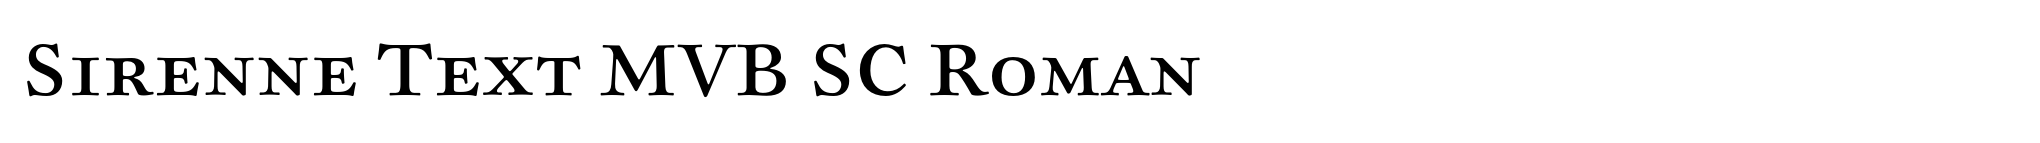 Sirenne Text MVB SC Roman image